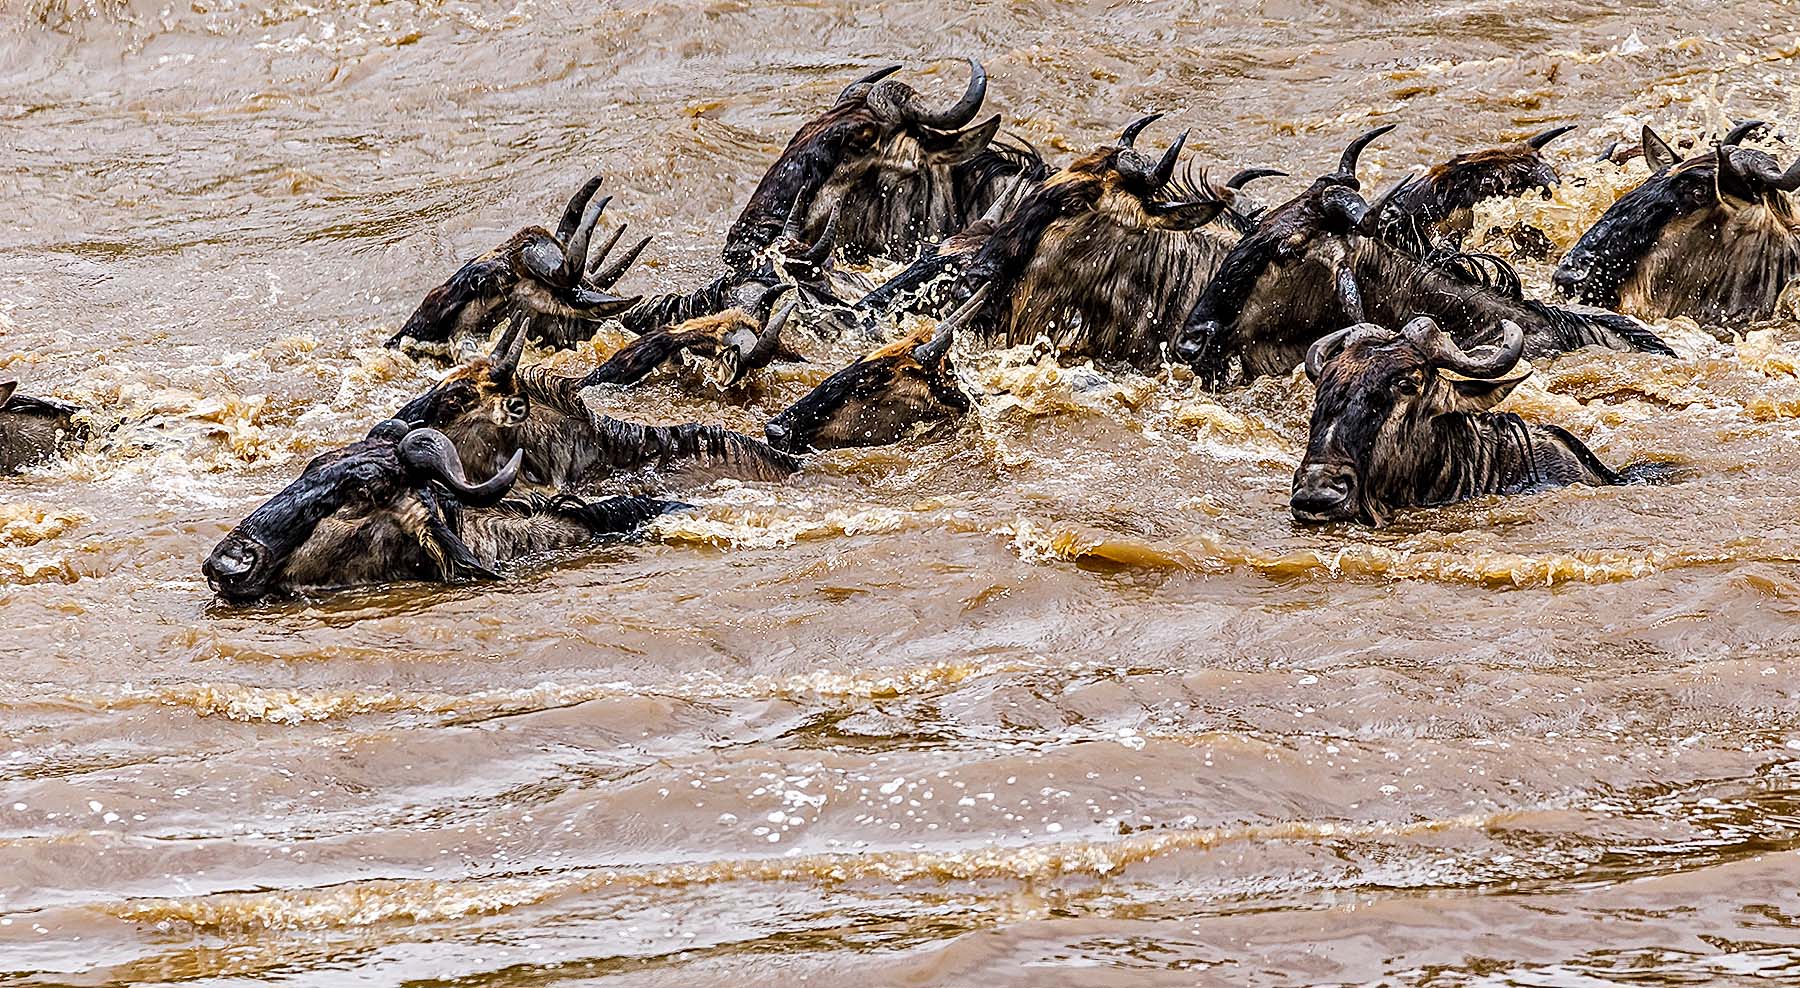 River Mara crossing